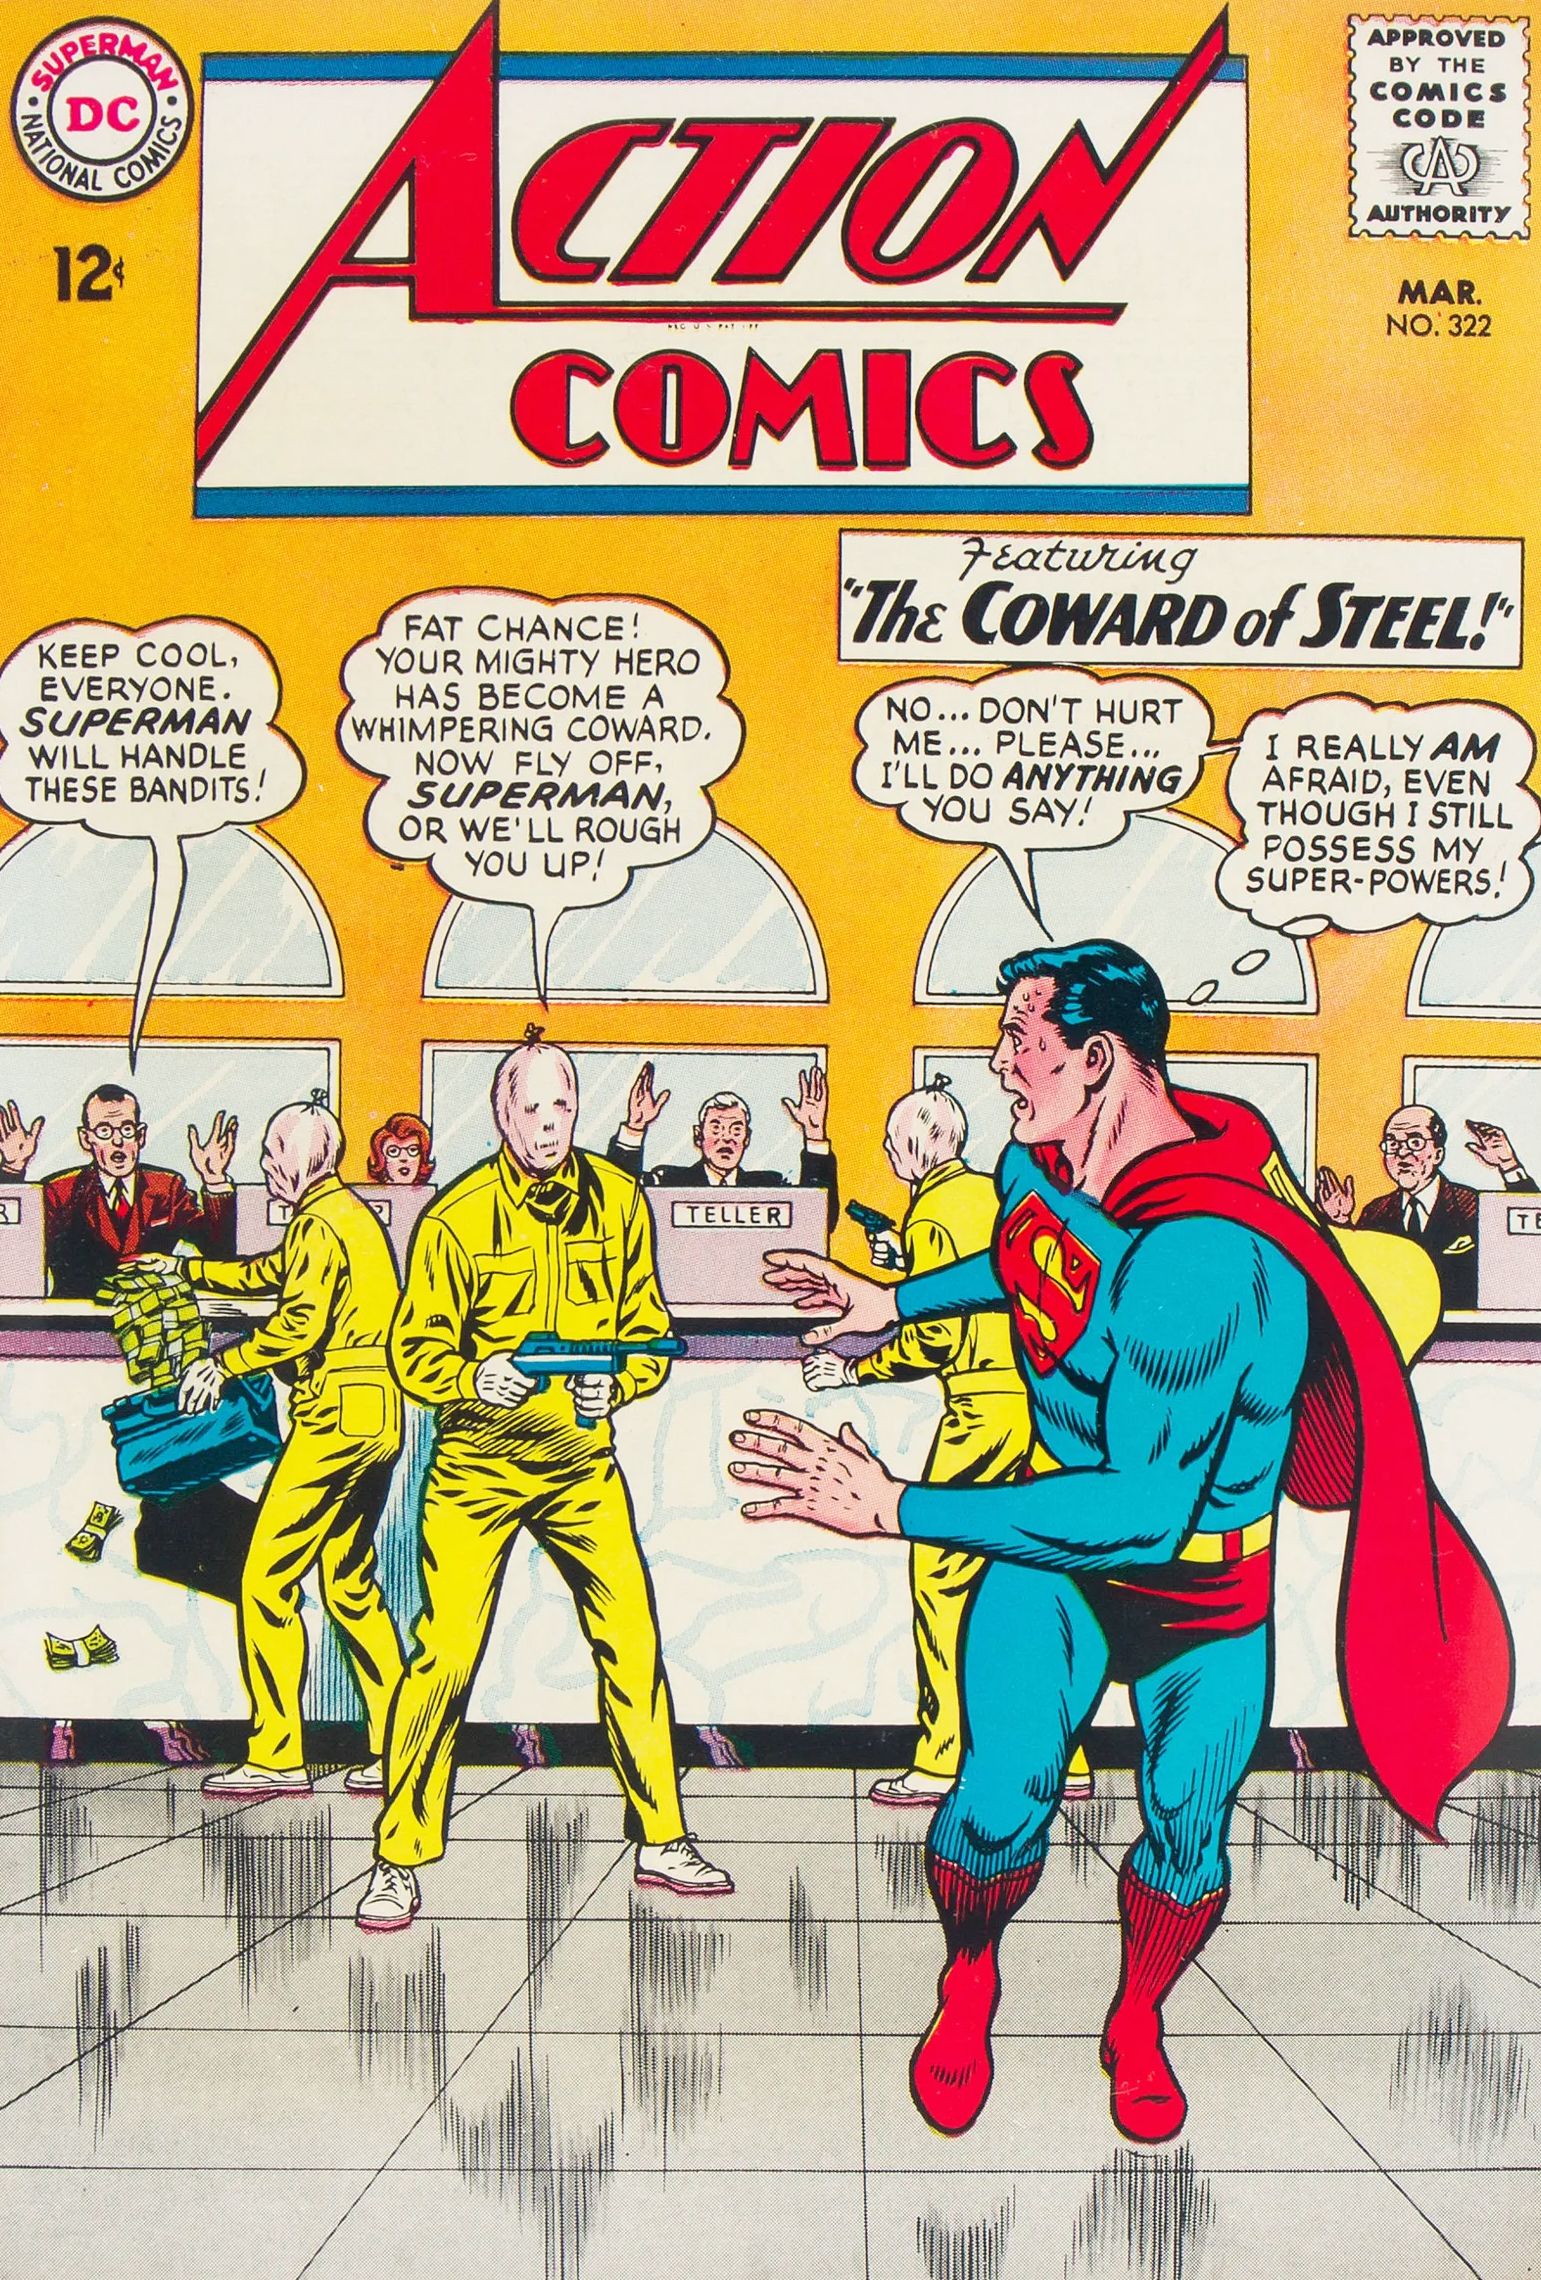 Action Comics #322 Comic